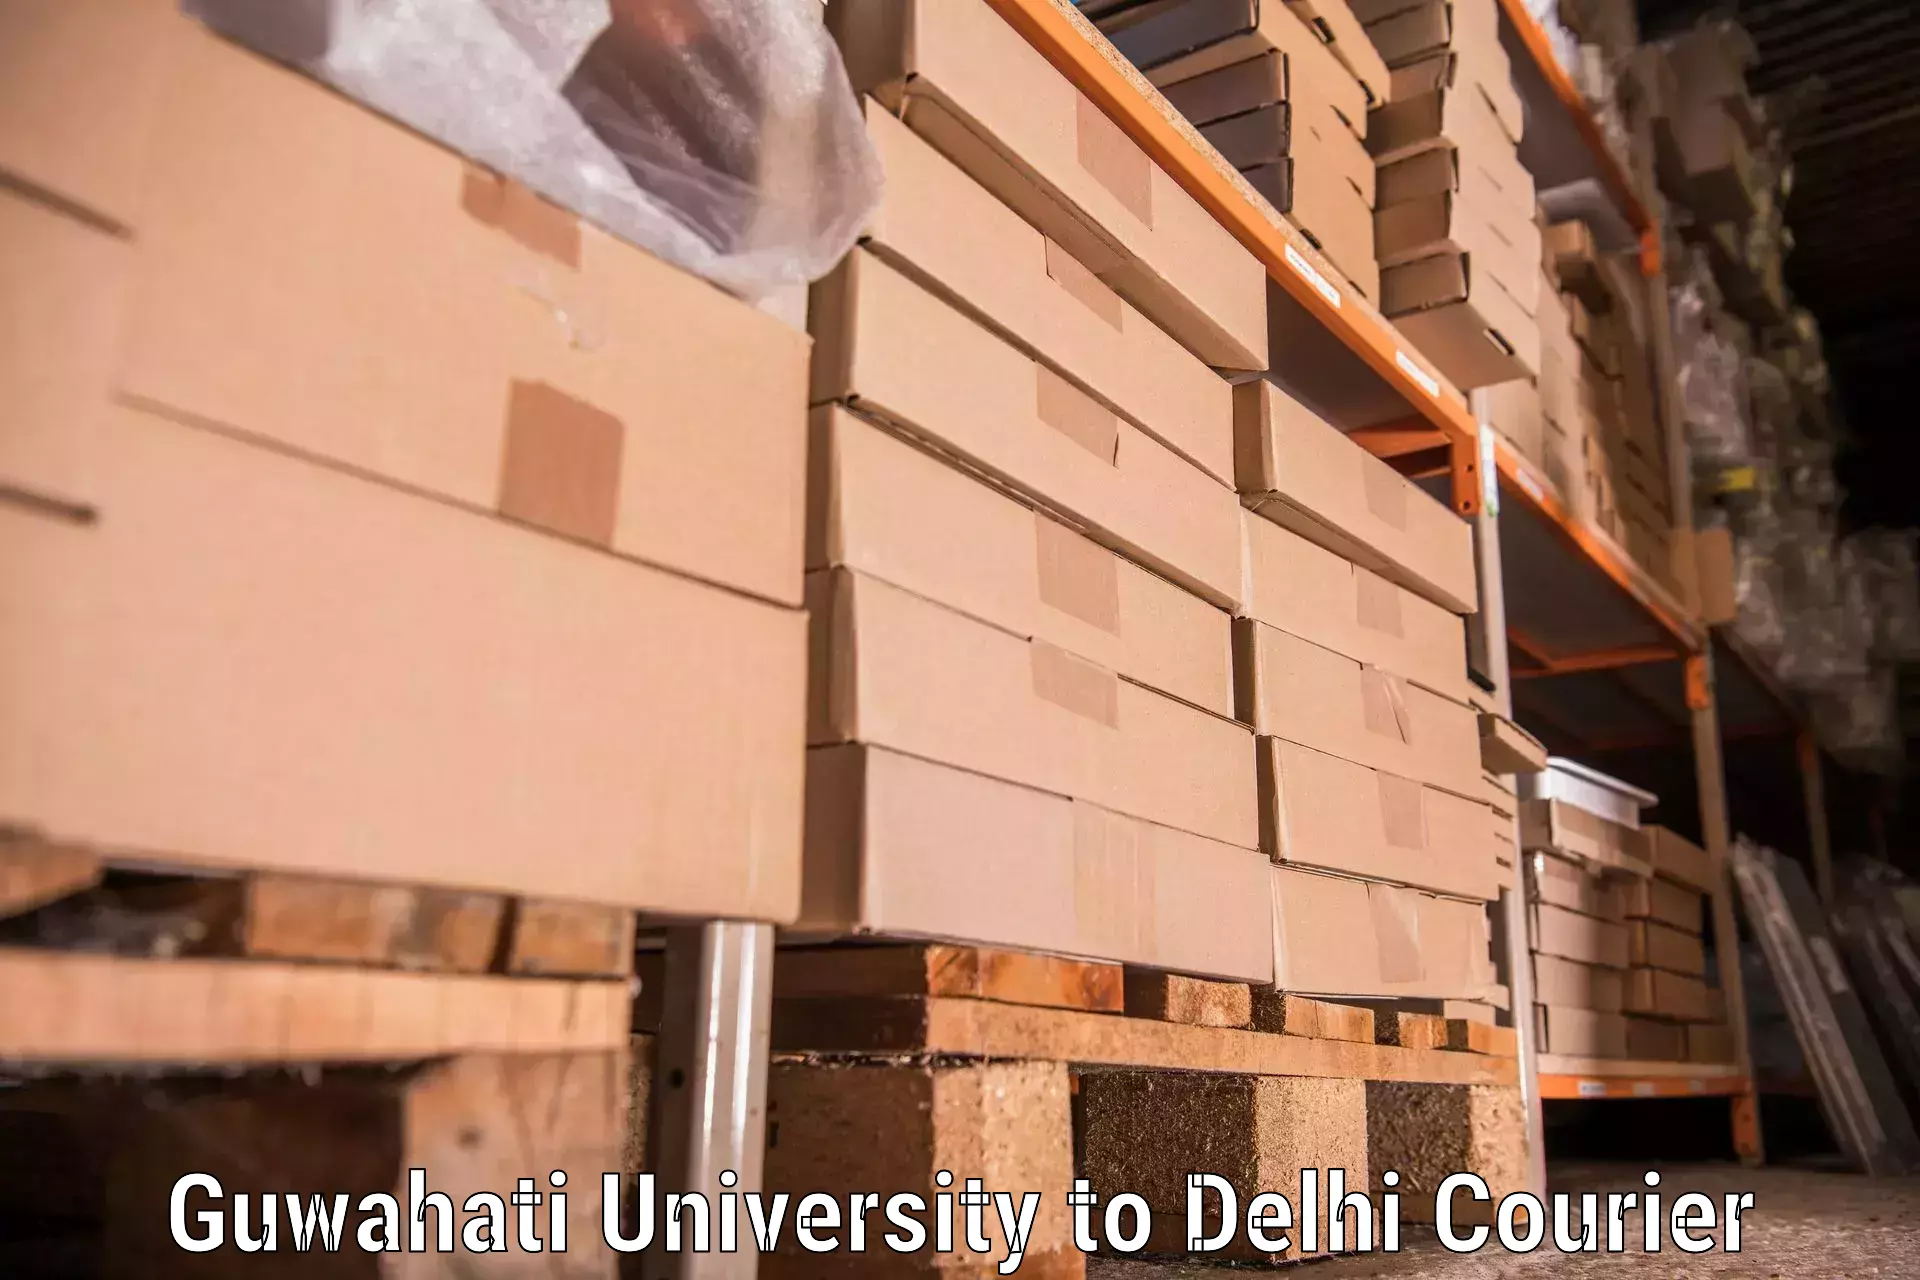 Furniture relocation experts Guwahati University to Kalkaji